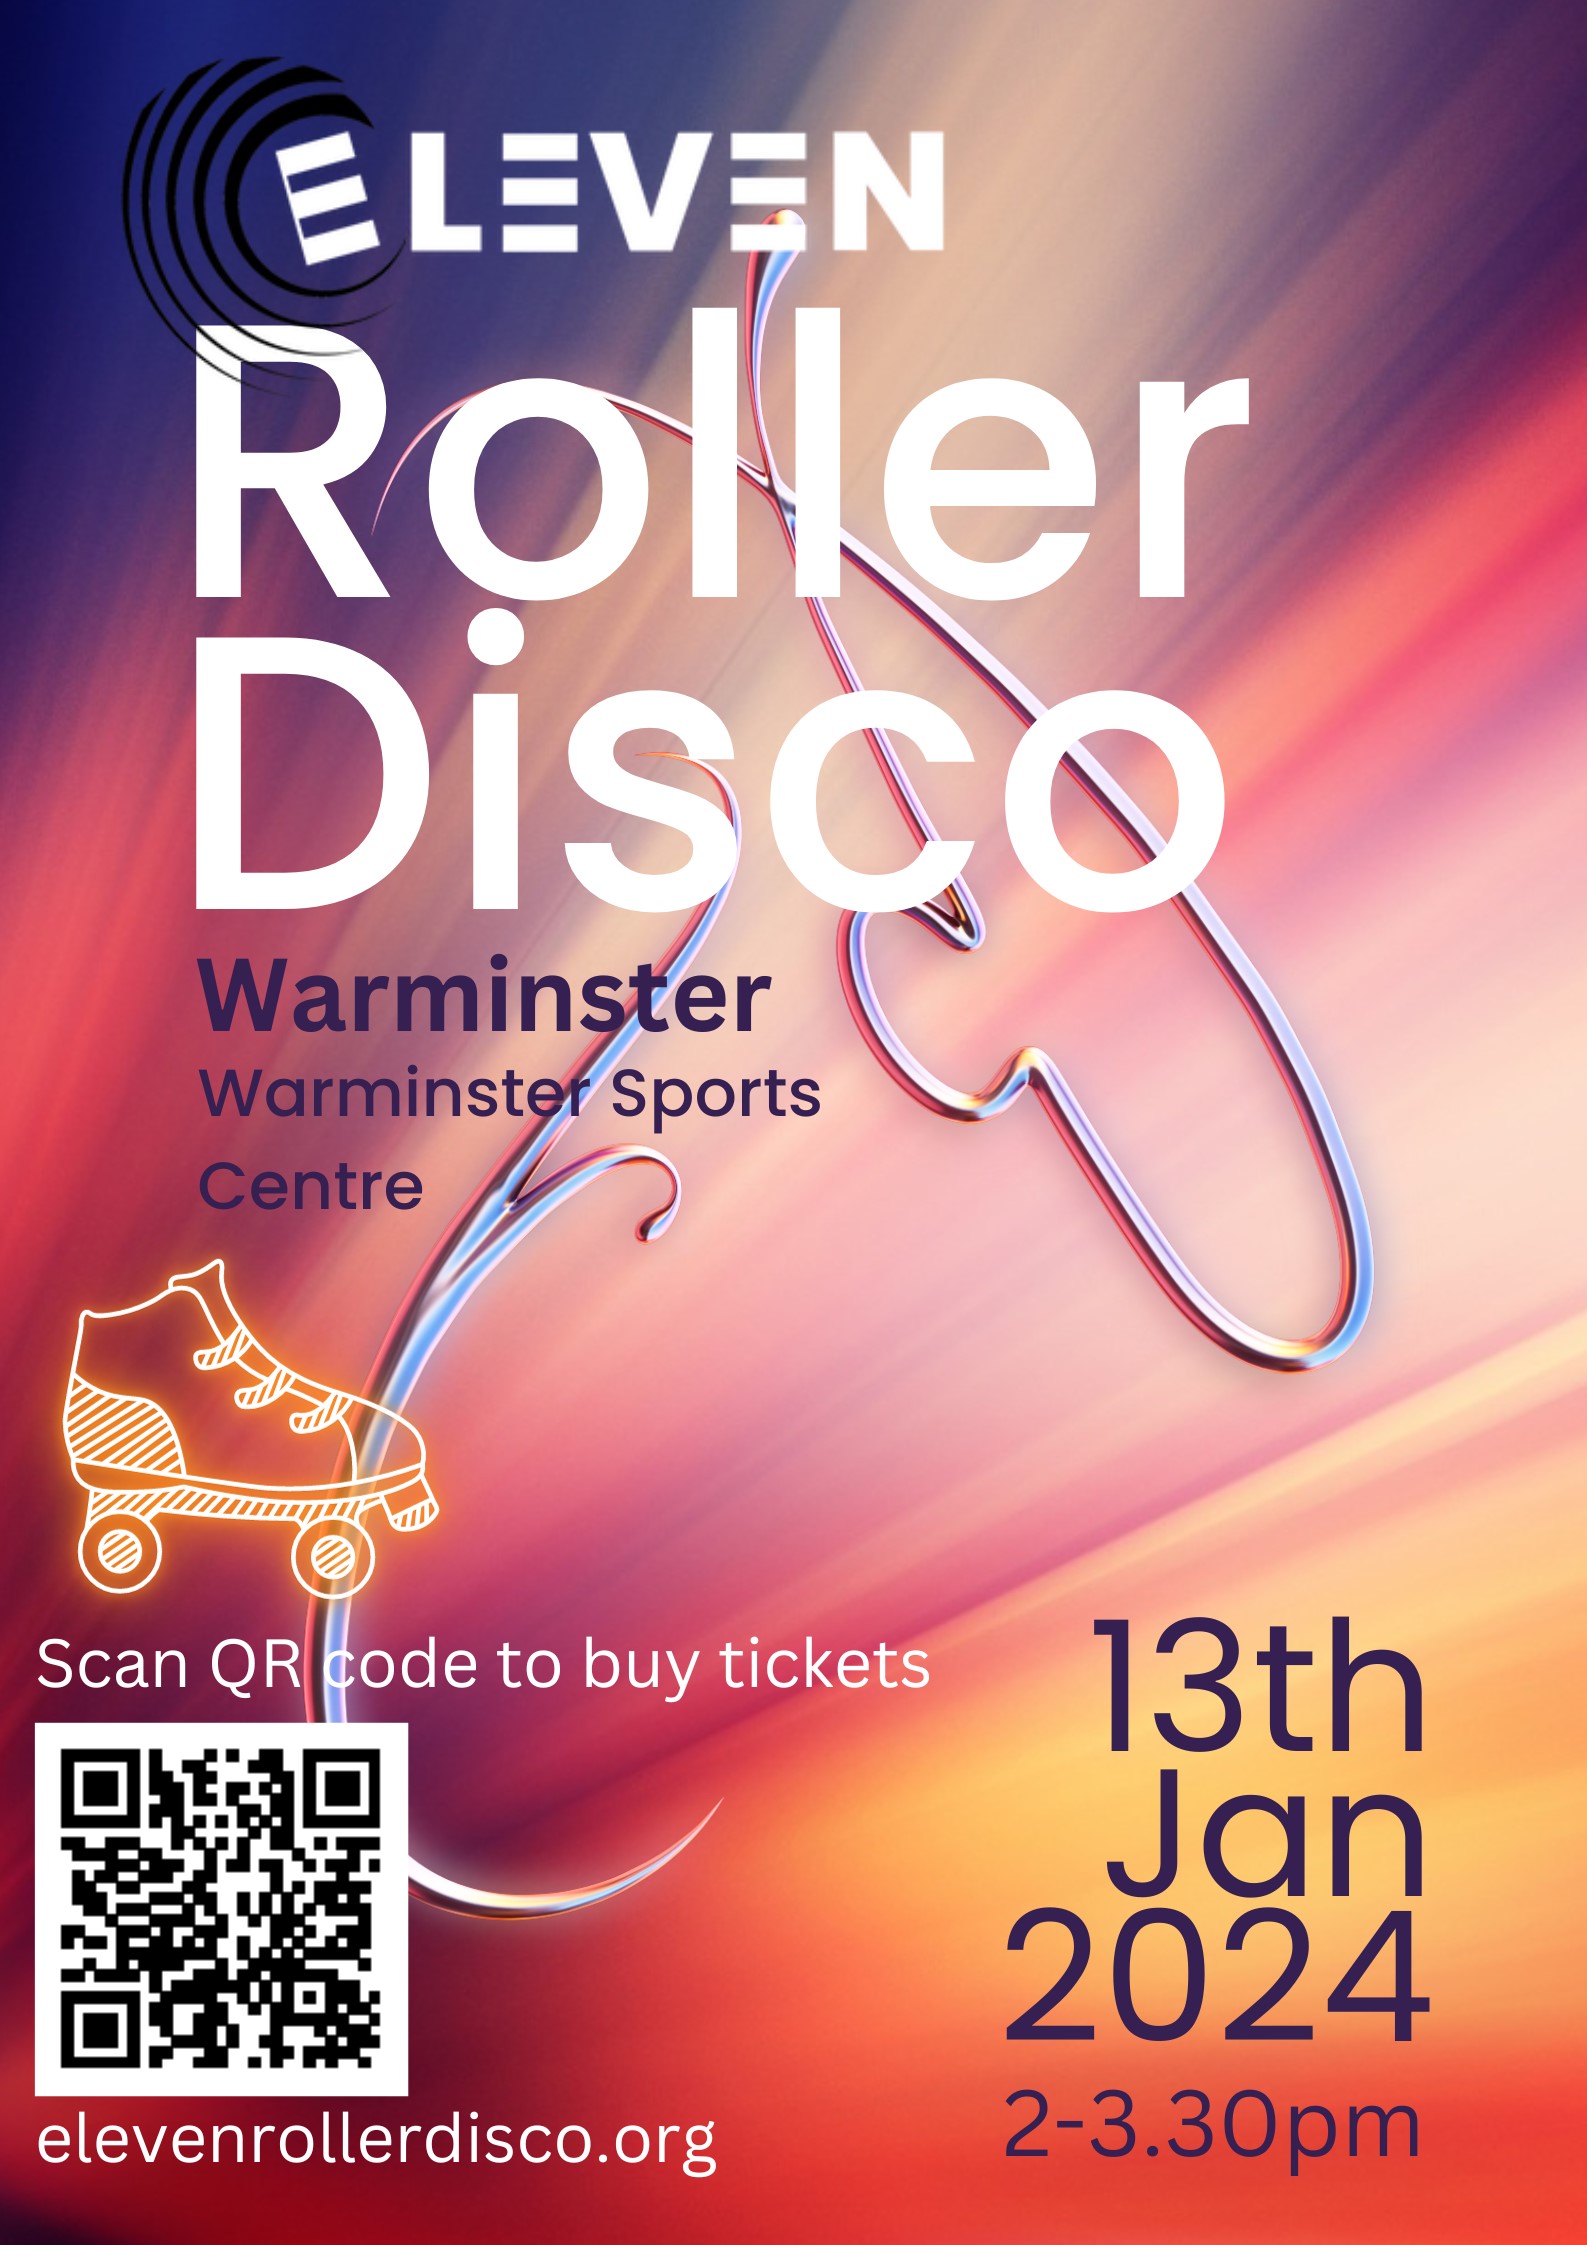 Warminster Roller Disco